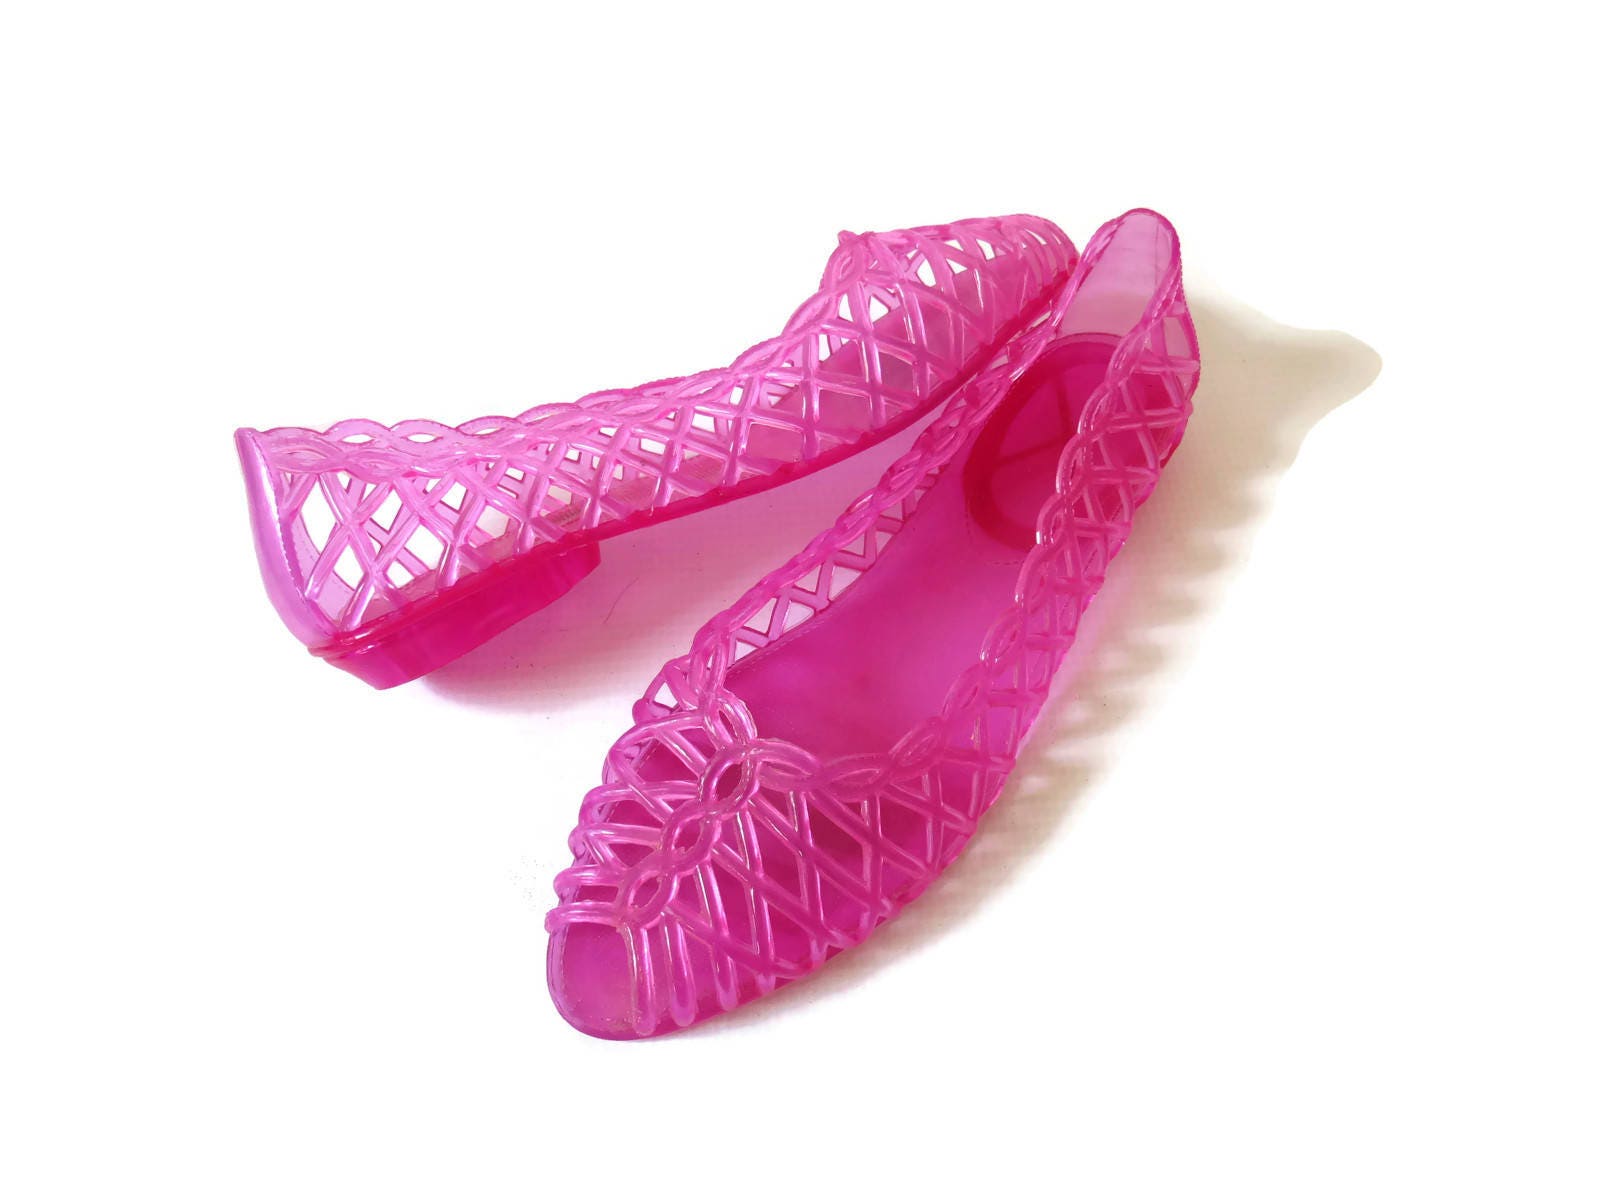 Shoes Jellies Sandals Hot Transparent Plastic Peep - India